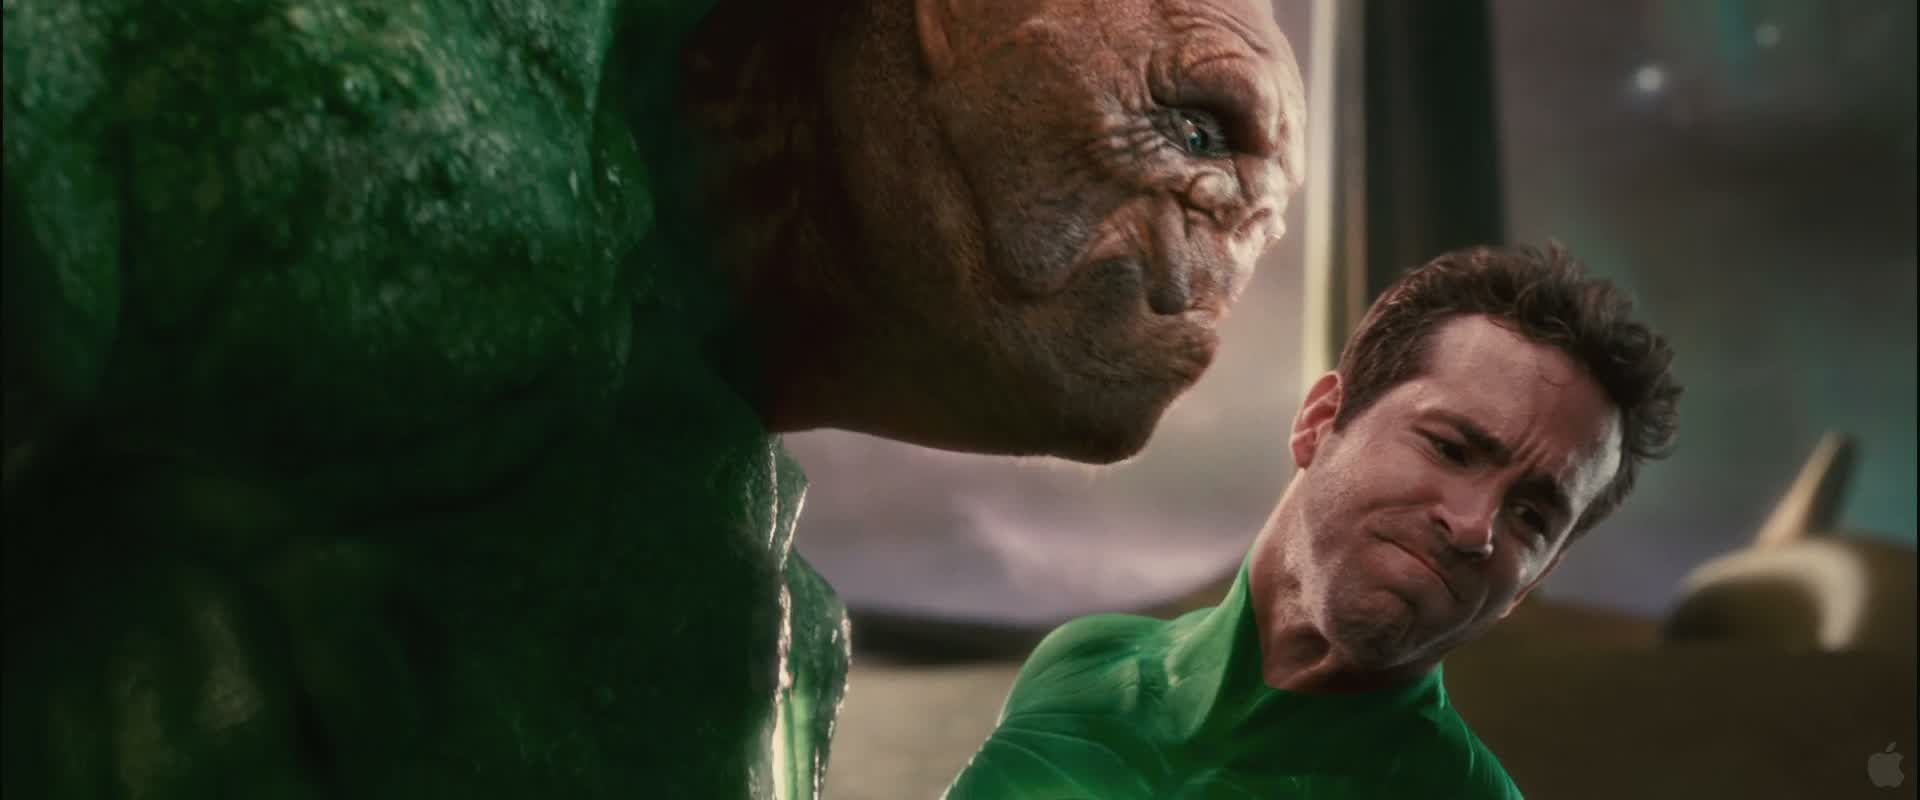 Michael Clarke Duncan Voicing Kilowog in 'Green Lantern' [UPDATED]